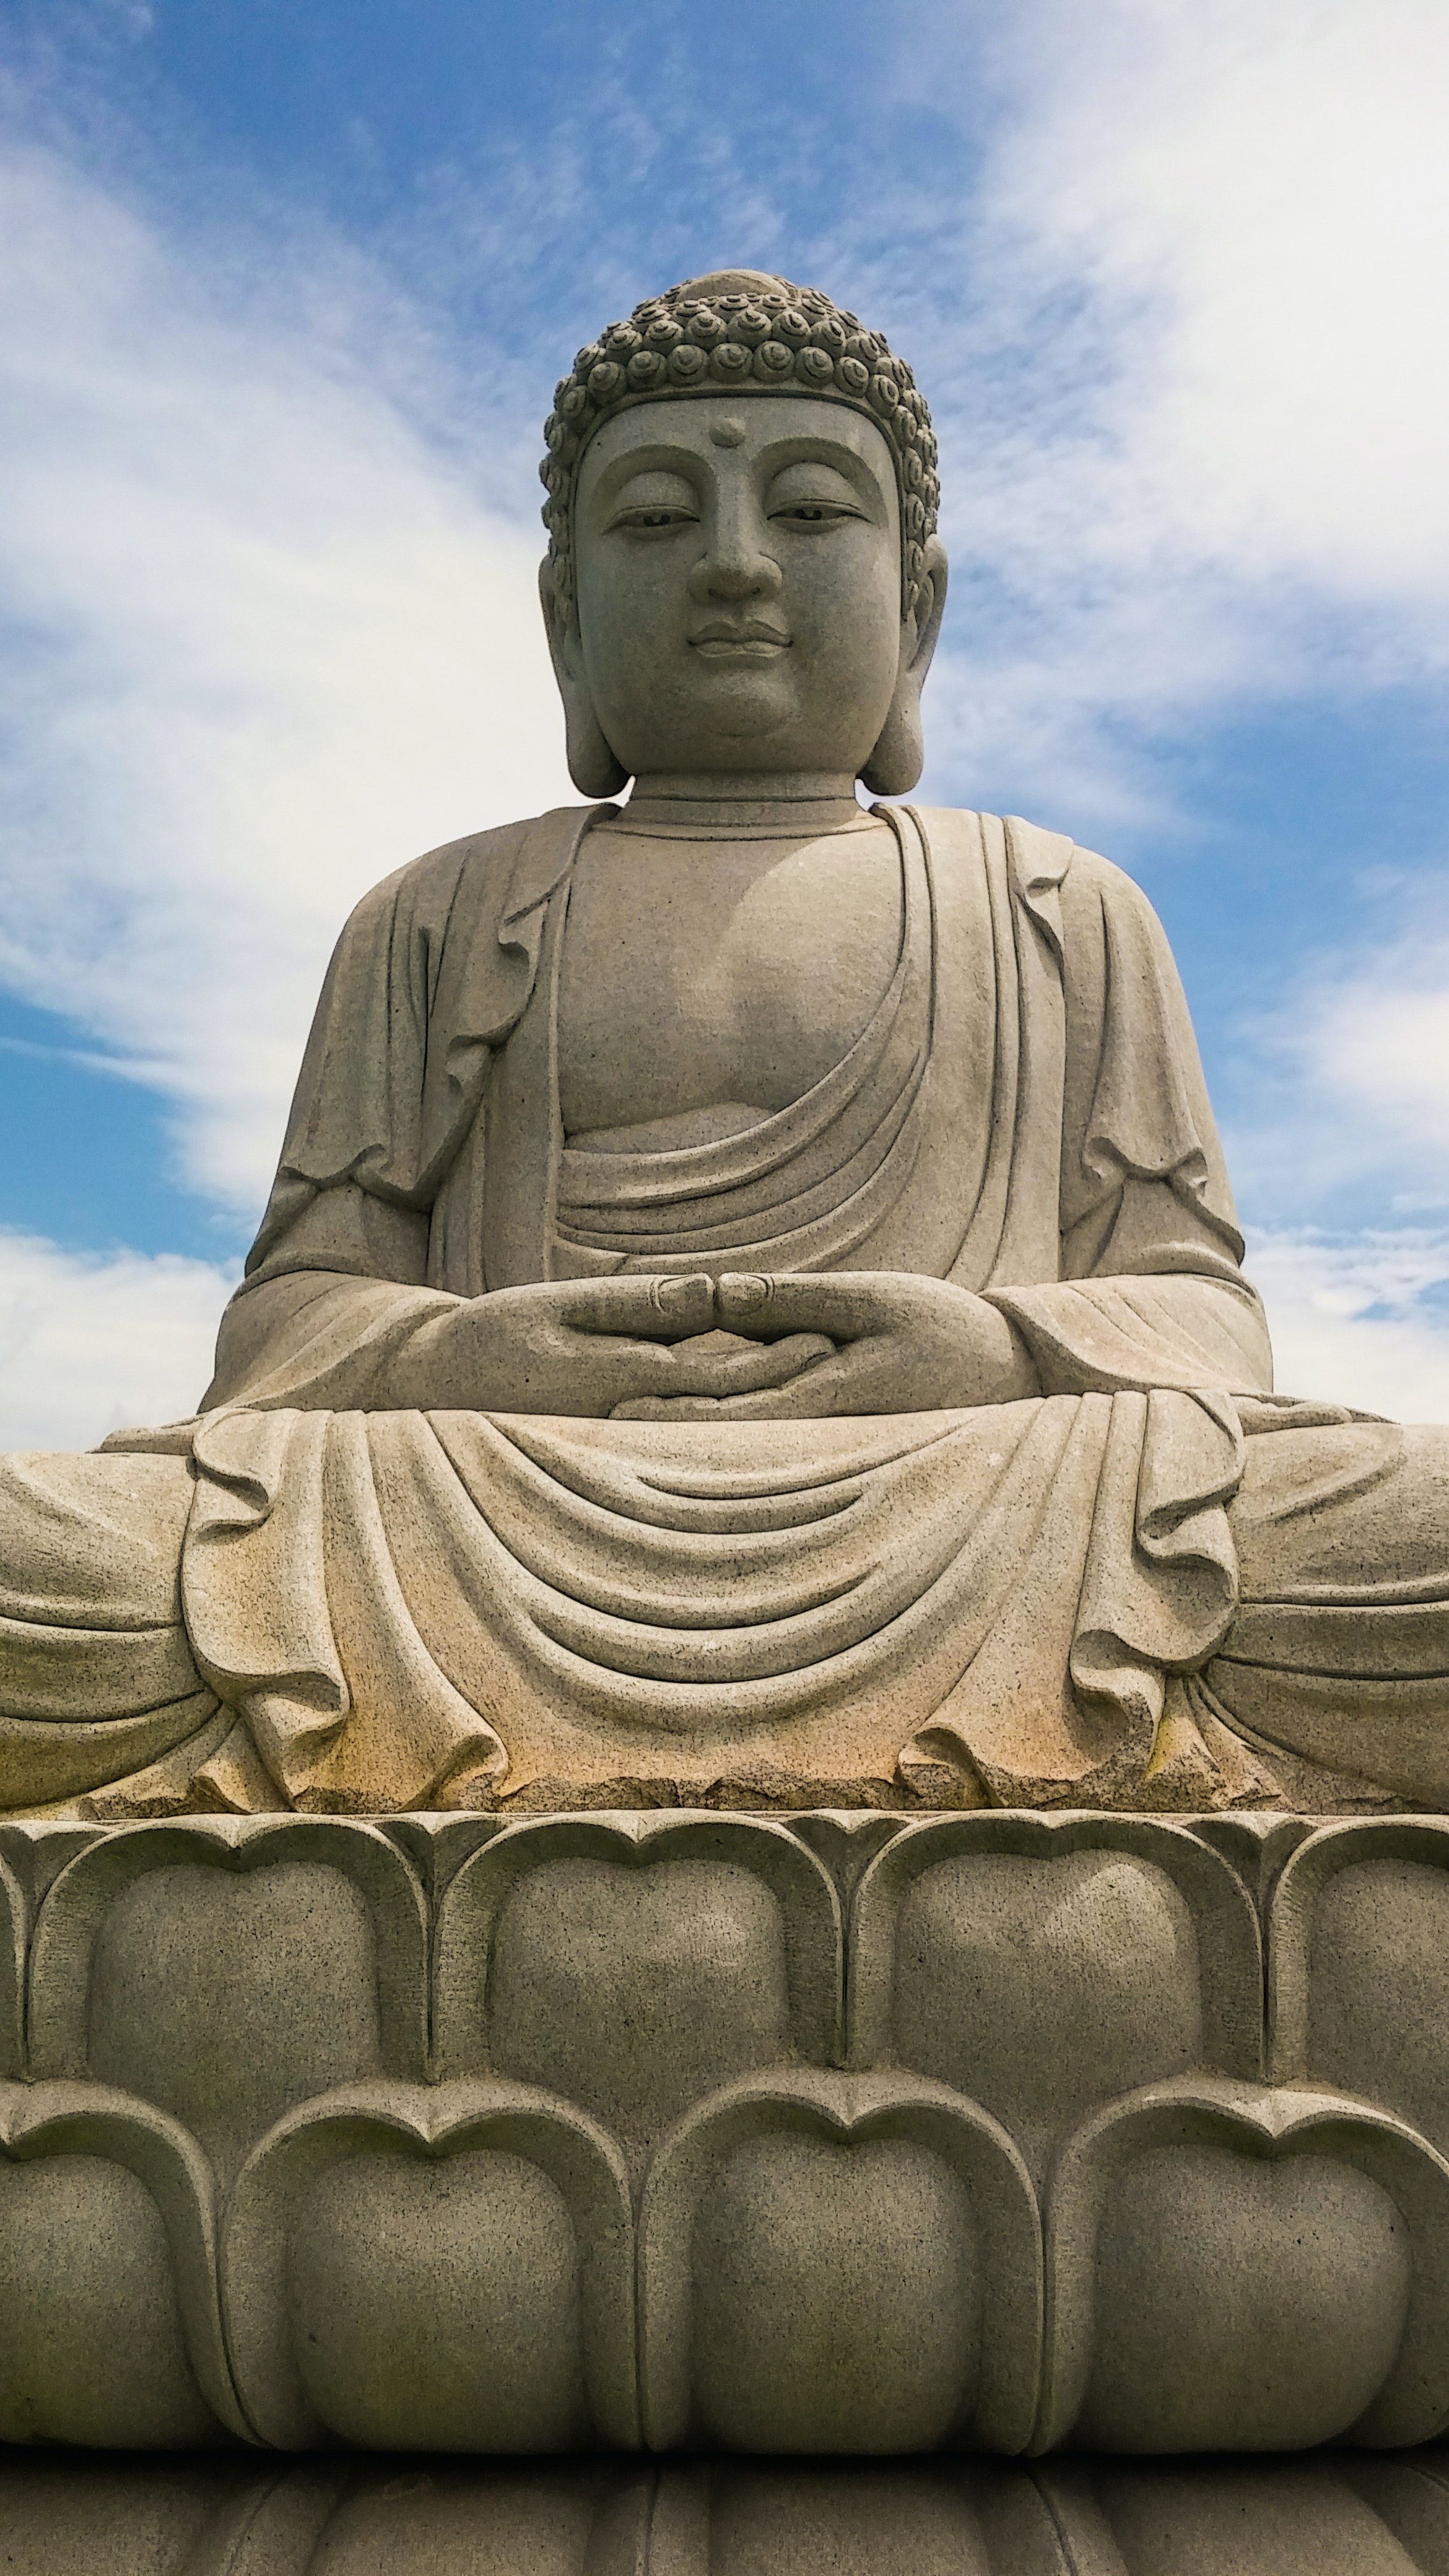 Best Buddha Image · 100% Free